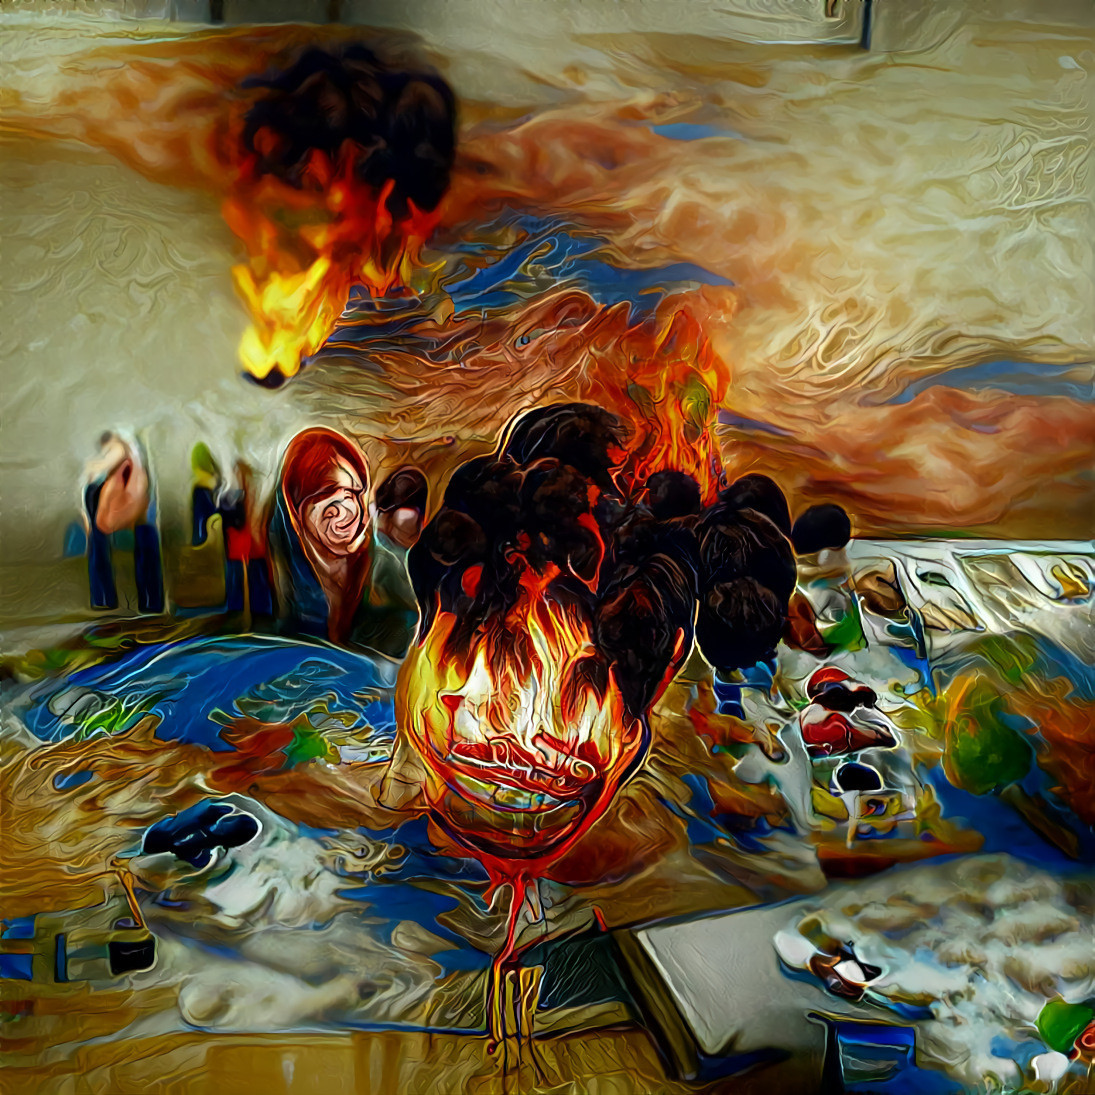 Stupid humans set the world on fire